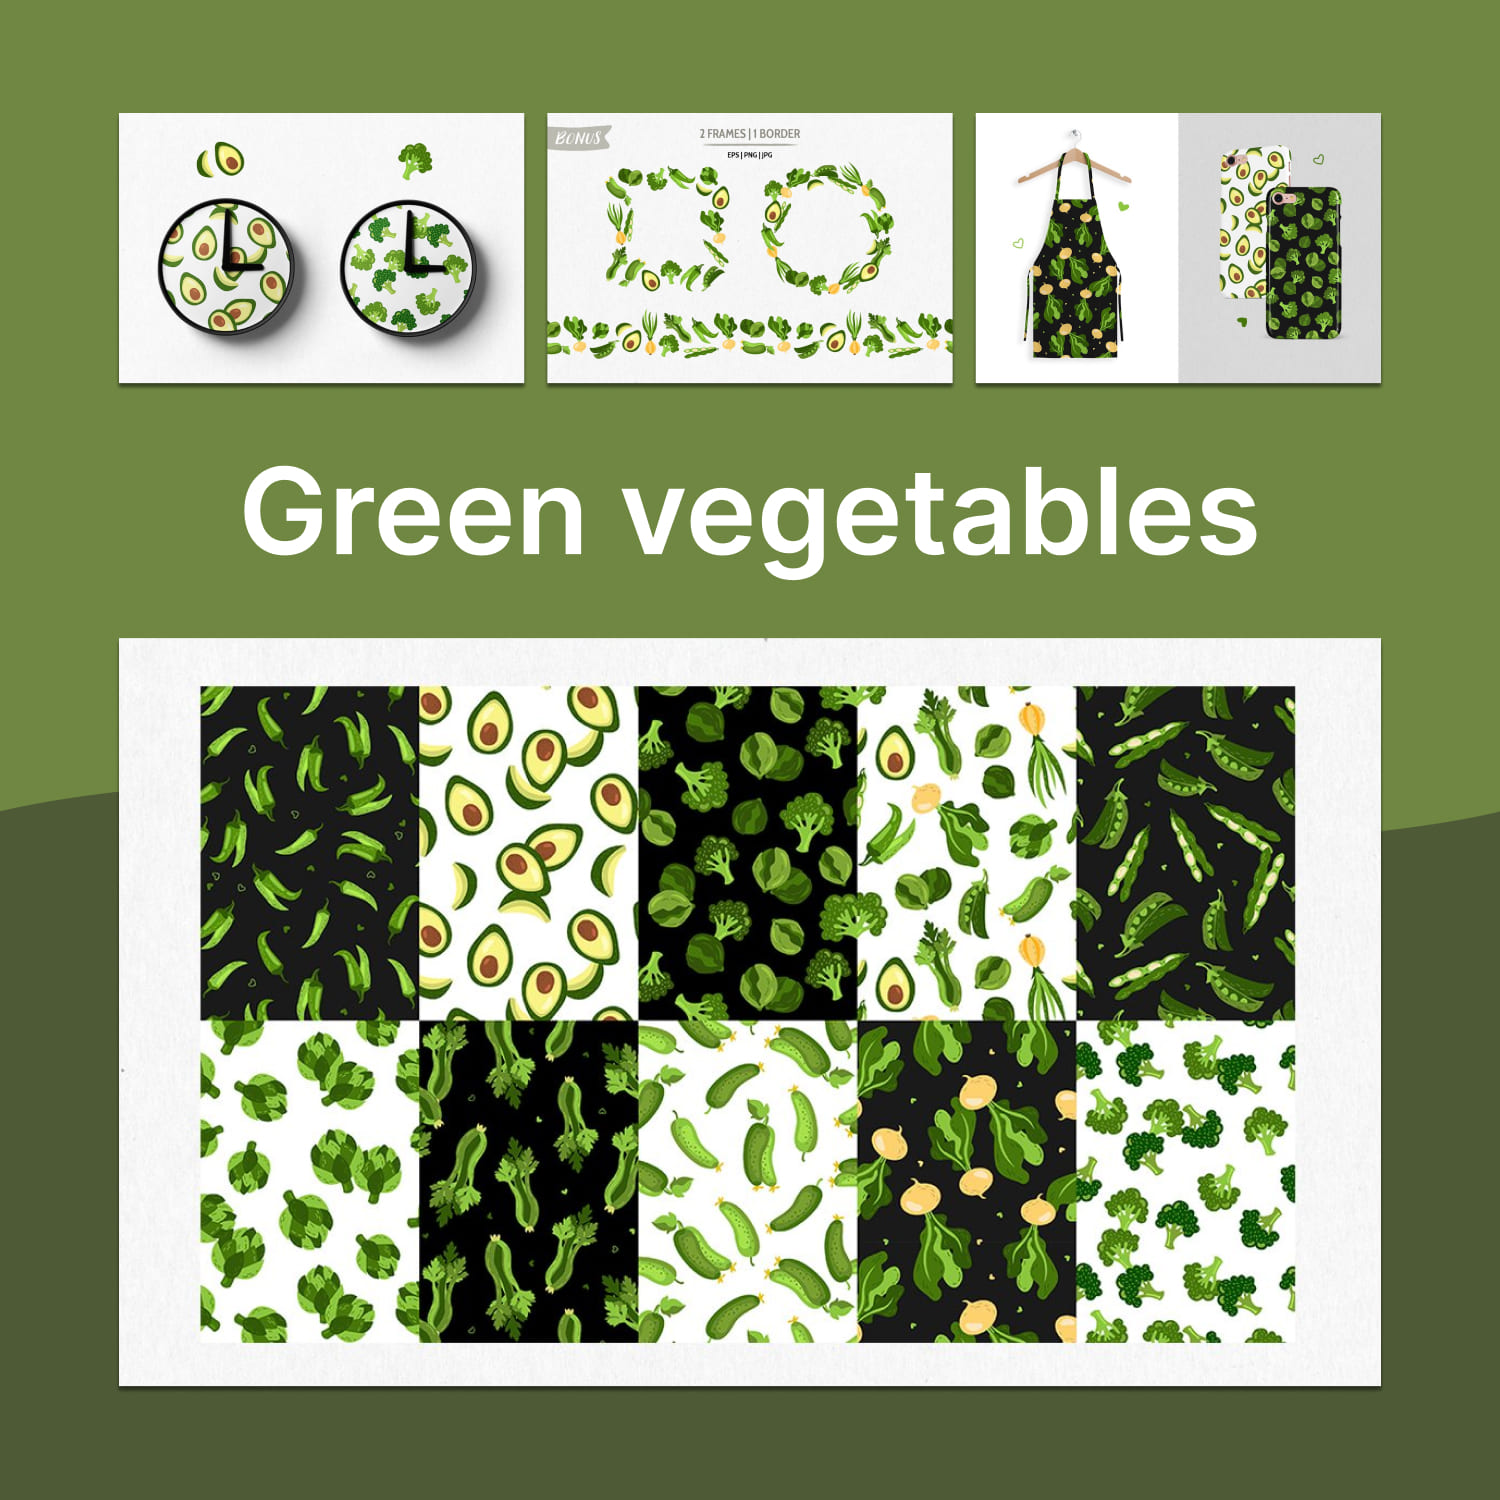 Green vegetables. vegetarian food - main image preview.